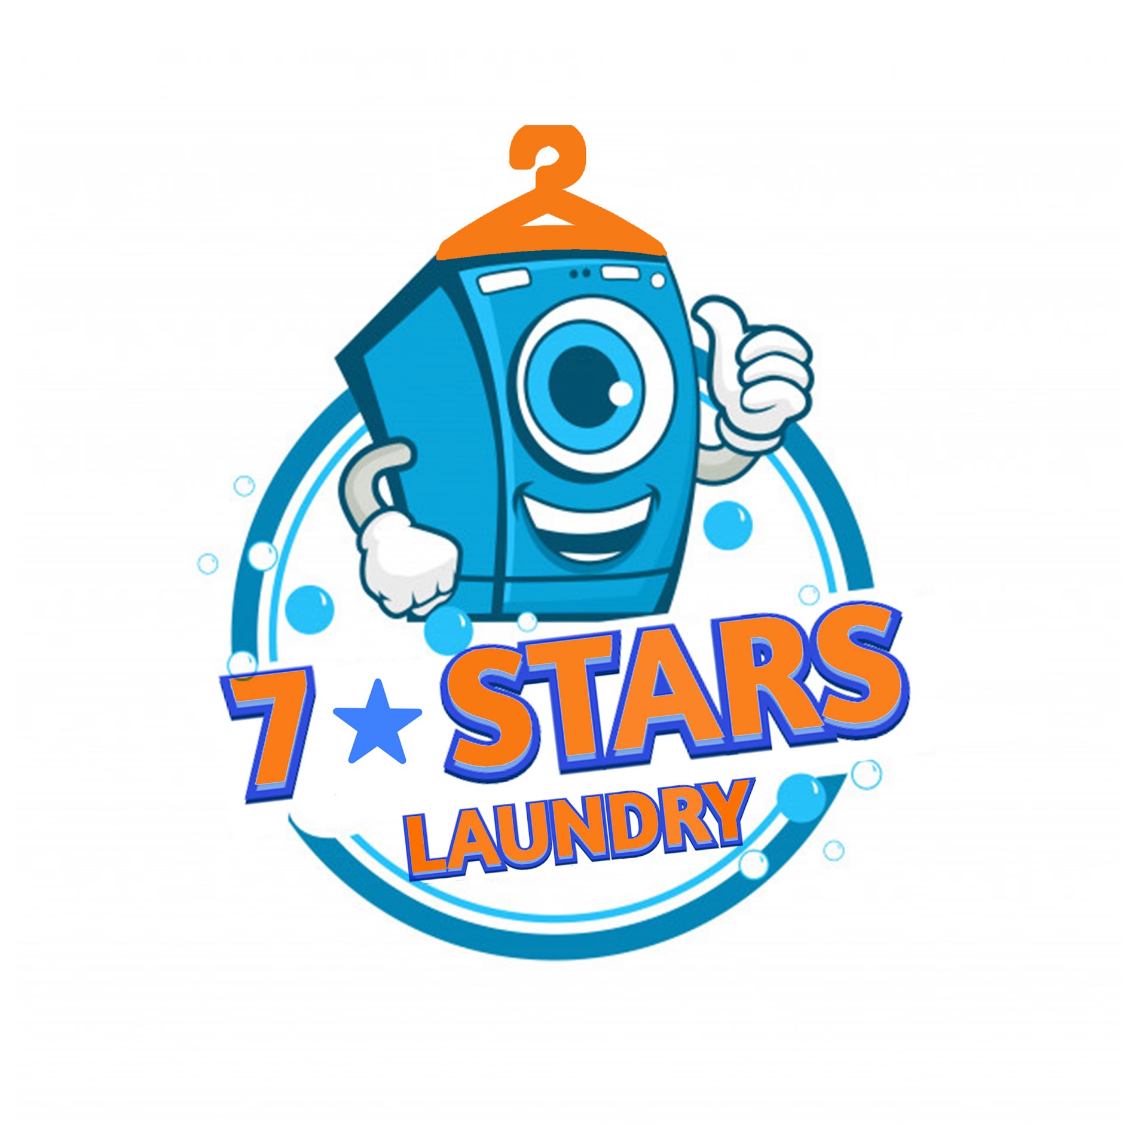 7 Stars Laundromat 286 Main St, Keansburg New Jersey 07734